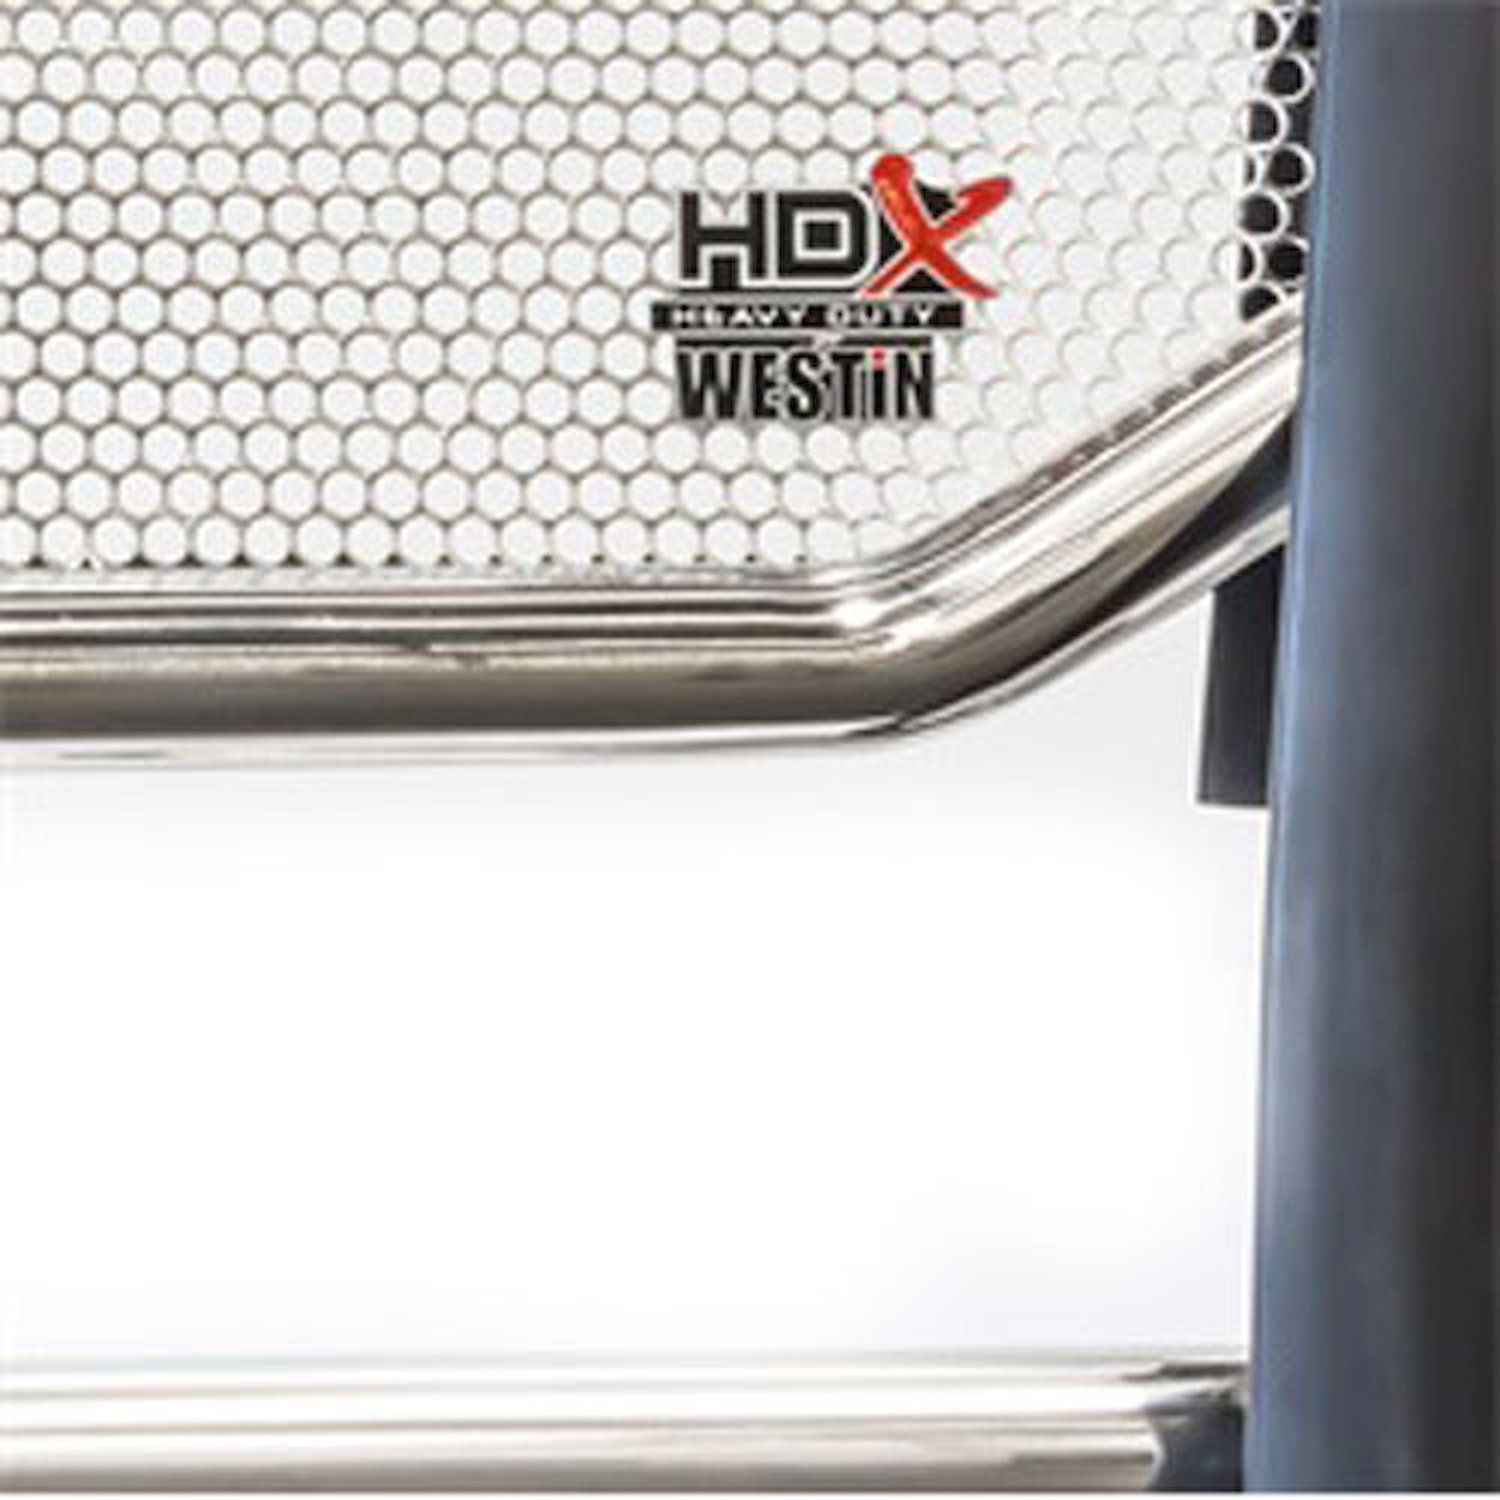 HDX Grille Guard 2014-15 Chevy Silverado 1500